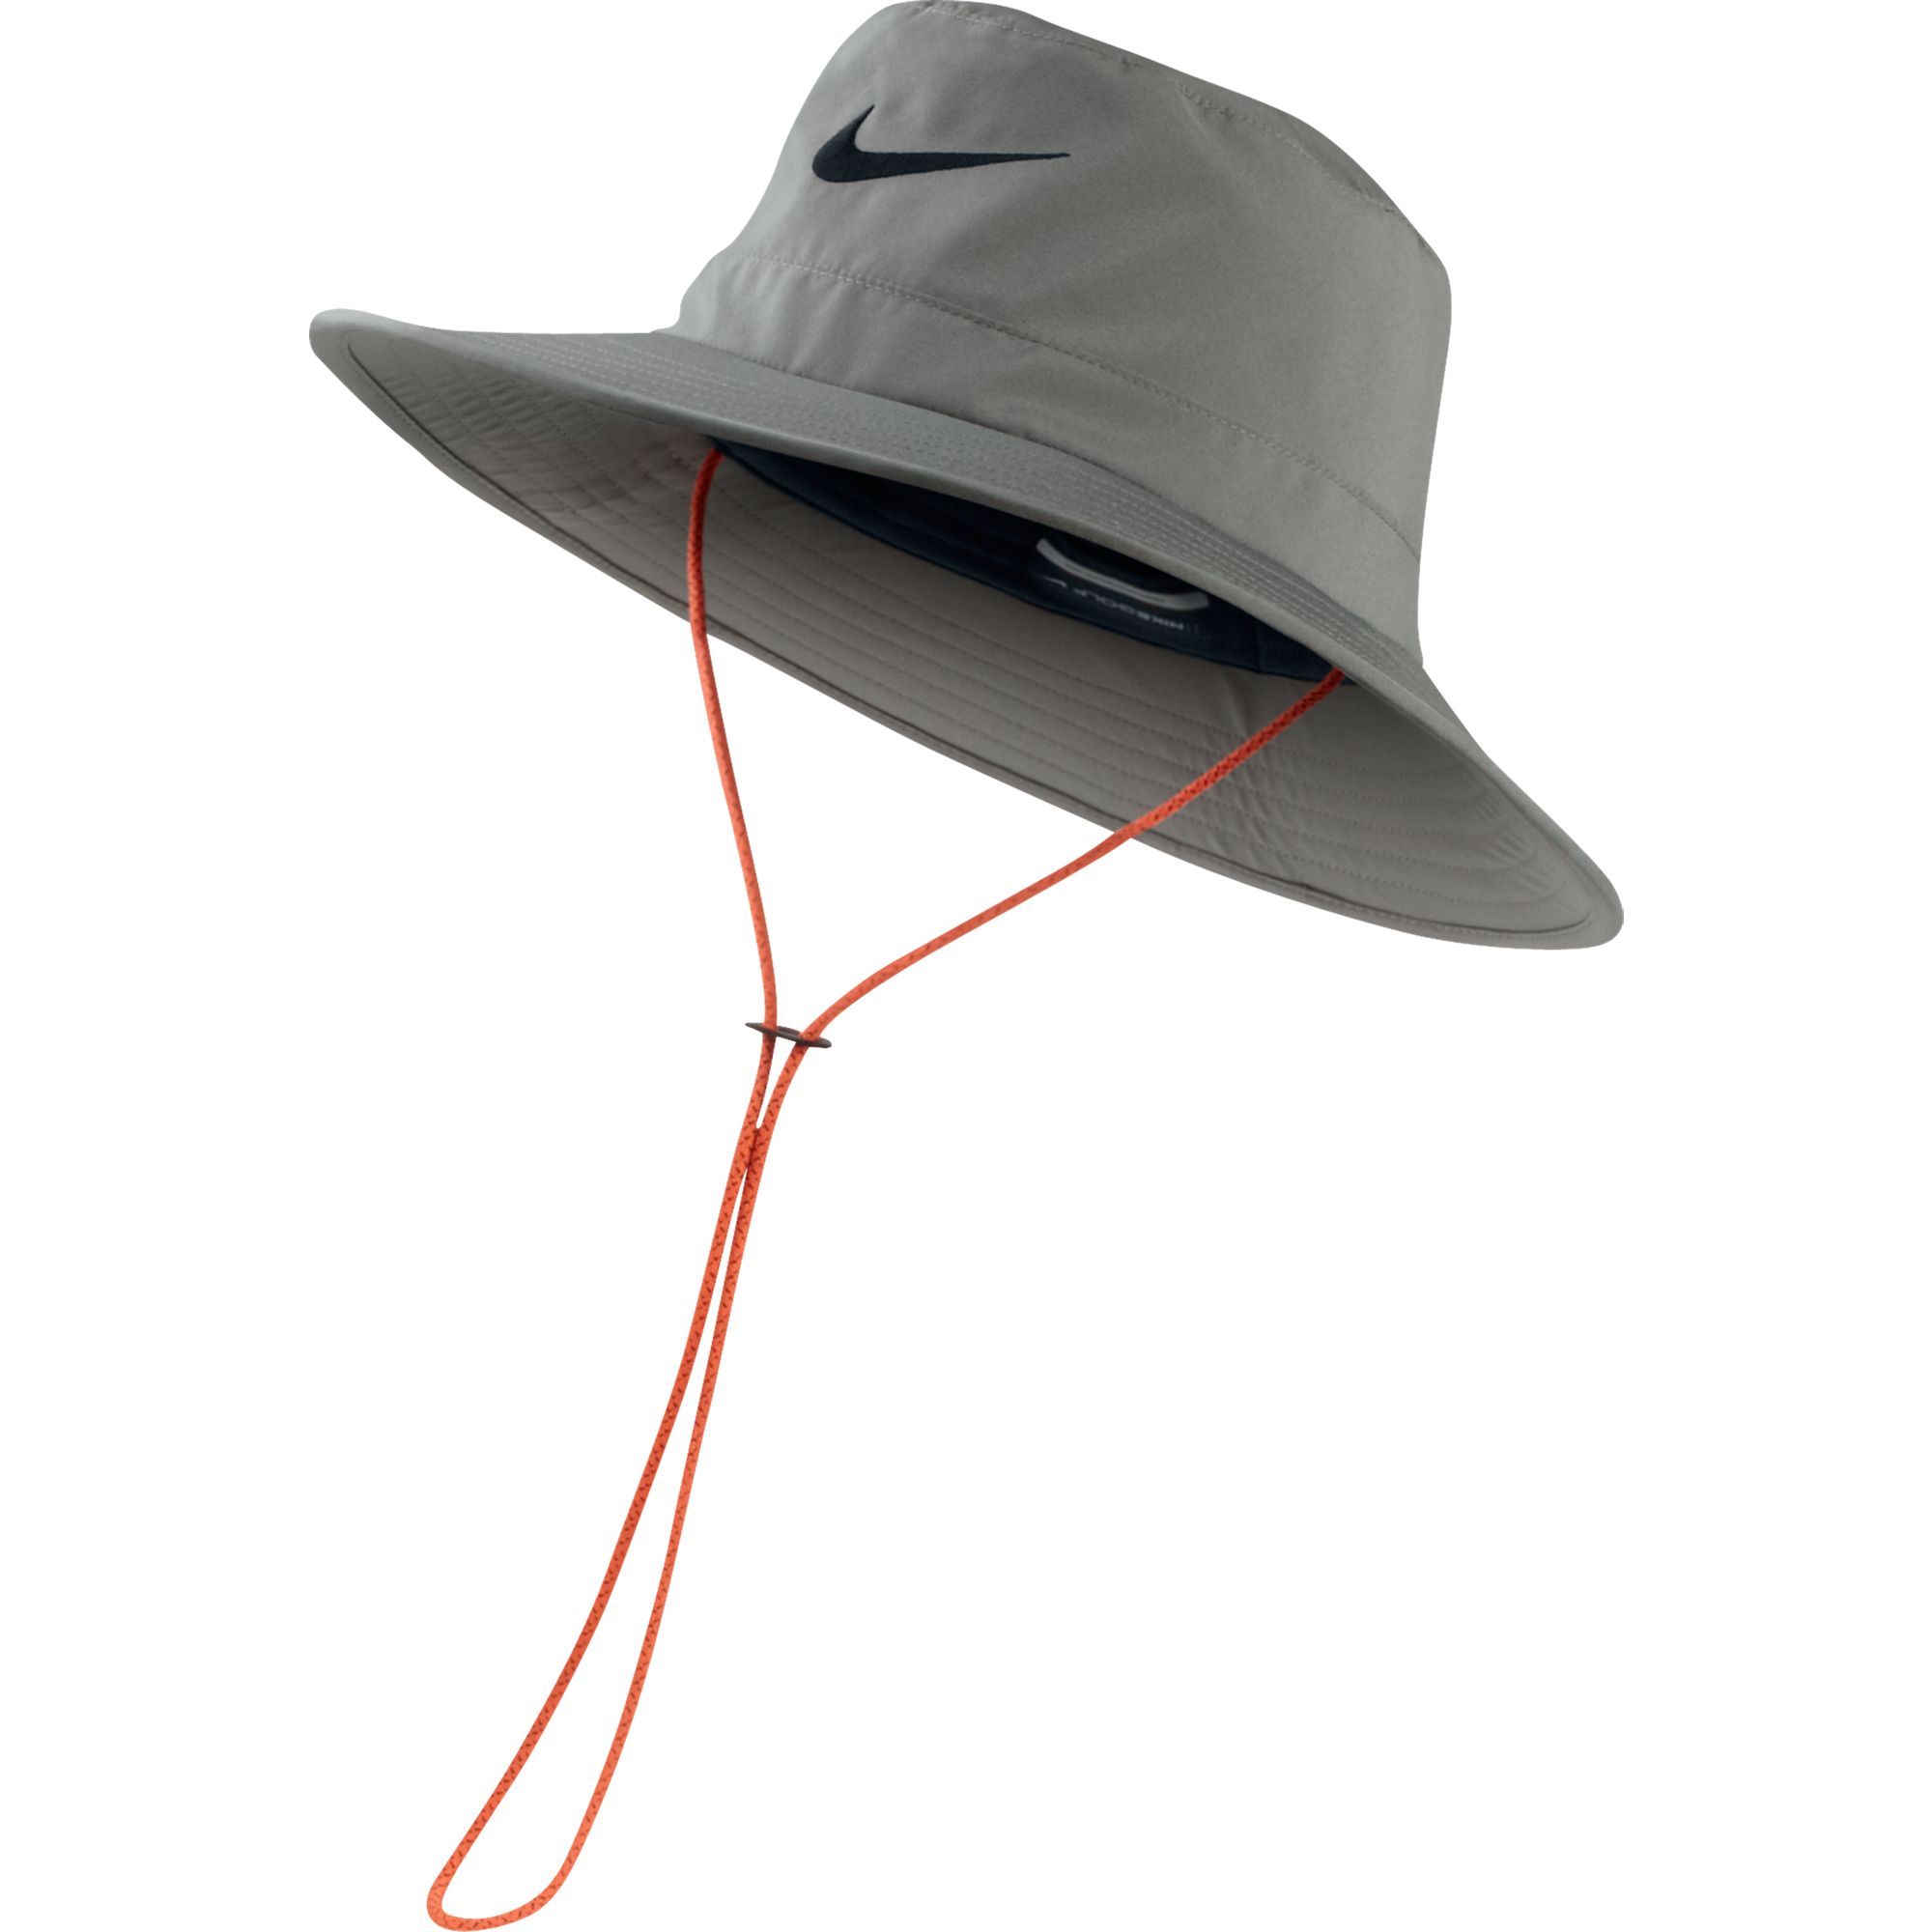 New 2014 Nike Sun Bucket Hat/Cap COLOR: Base Grey SIZE: Small/Medium | eBay